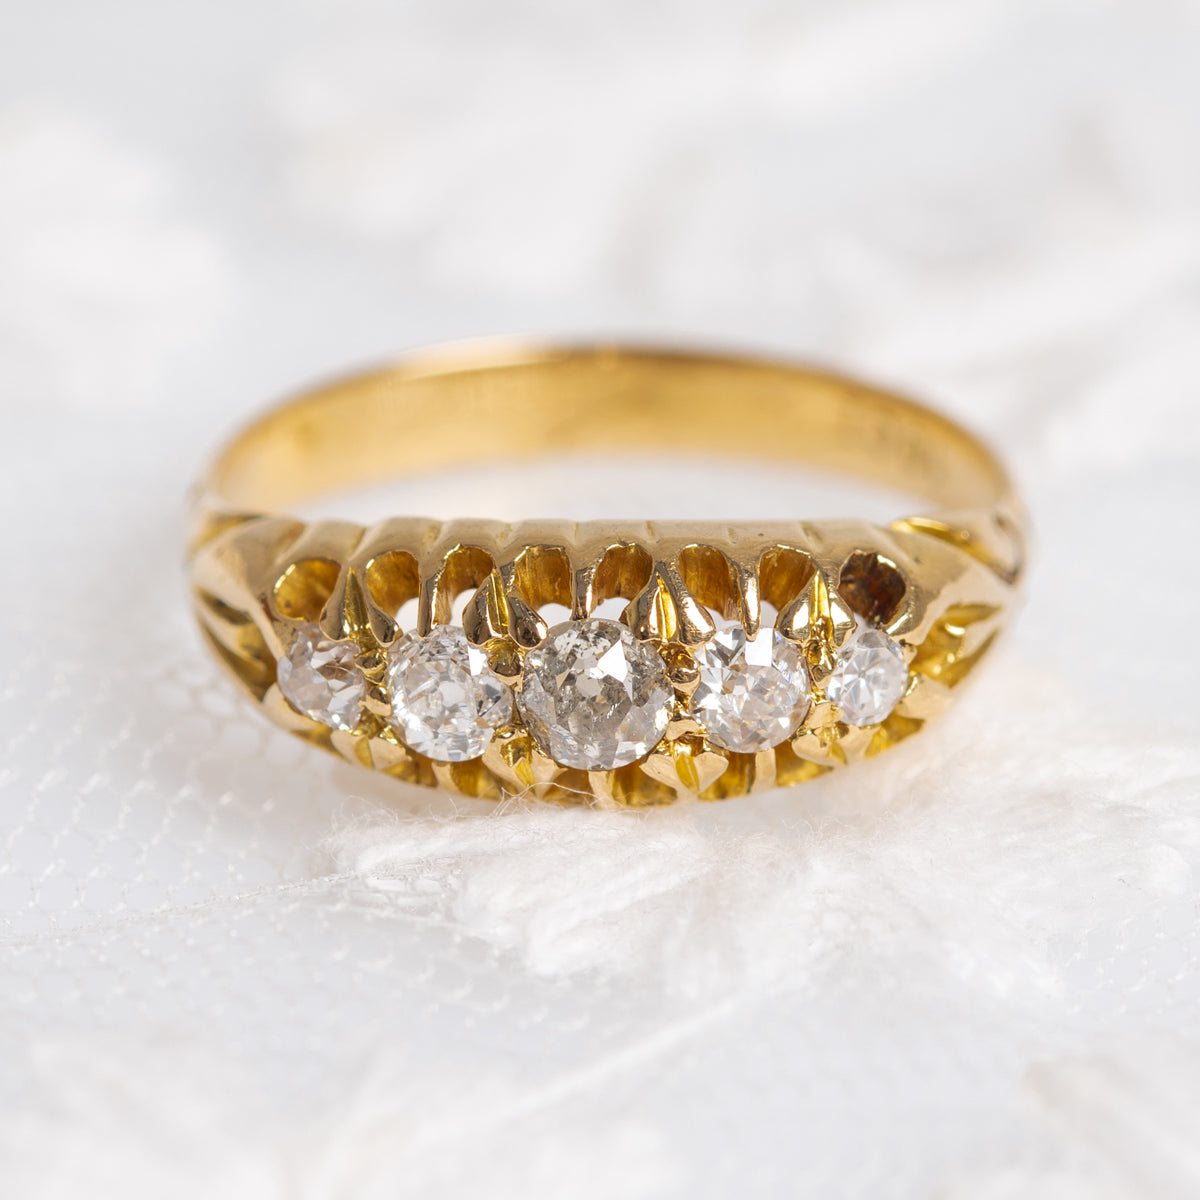 Antique Edwardian Five Diamond Gemstone Ring In 18ct Gold UK Size K  (A1397)